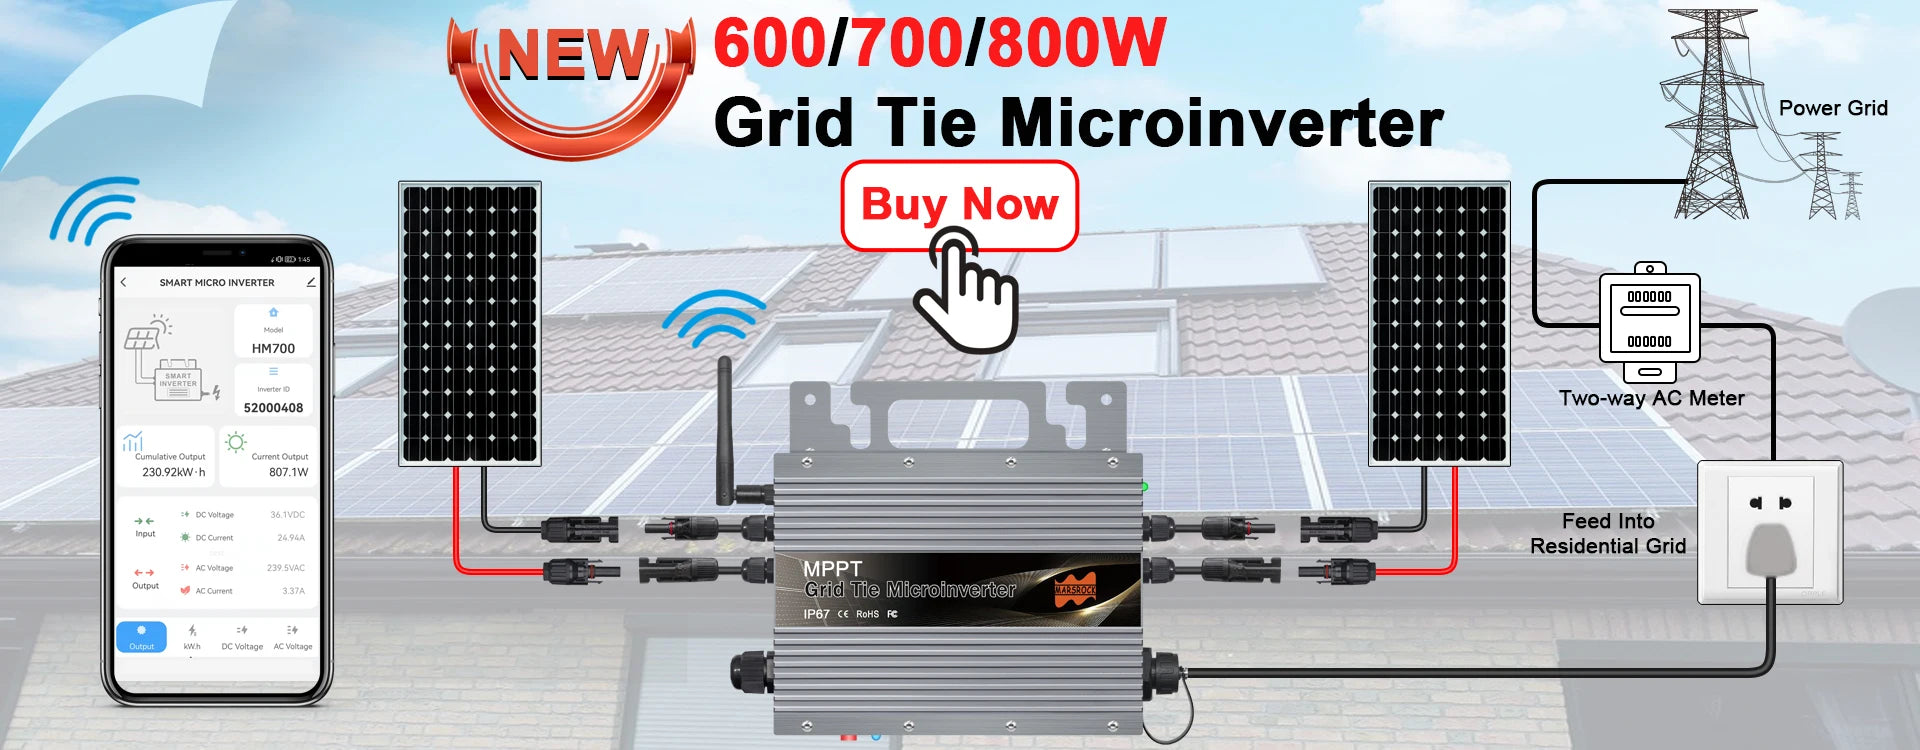 800W Grid Tie Micro Inverter